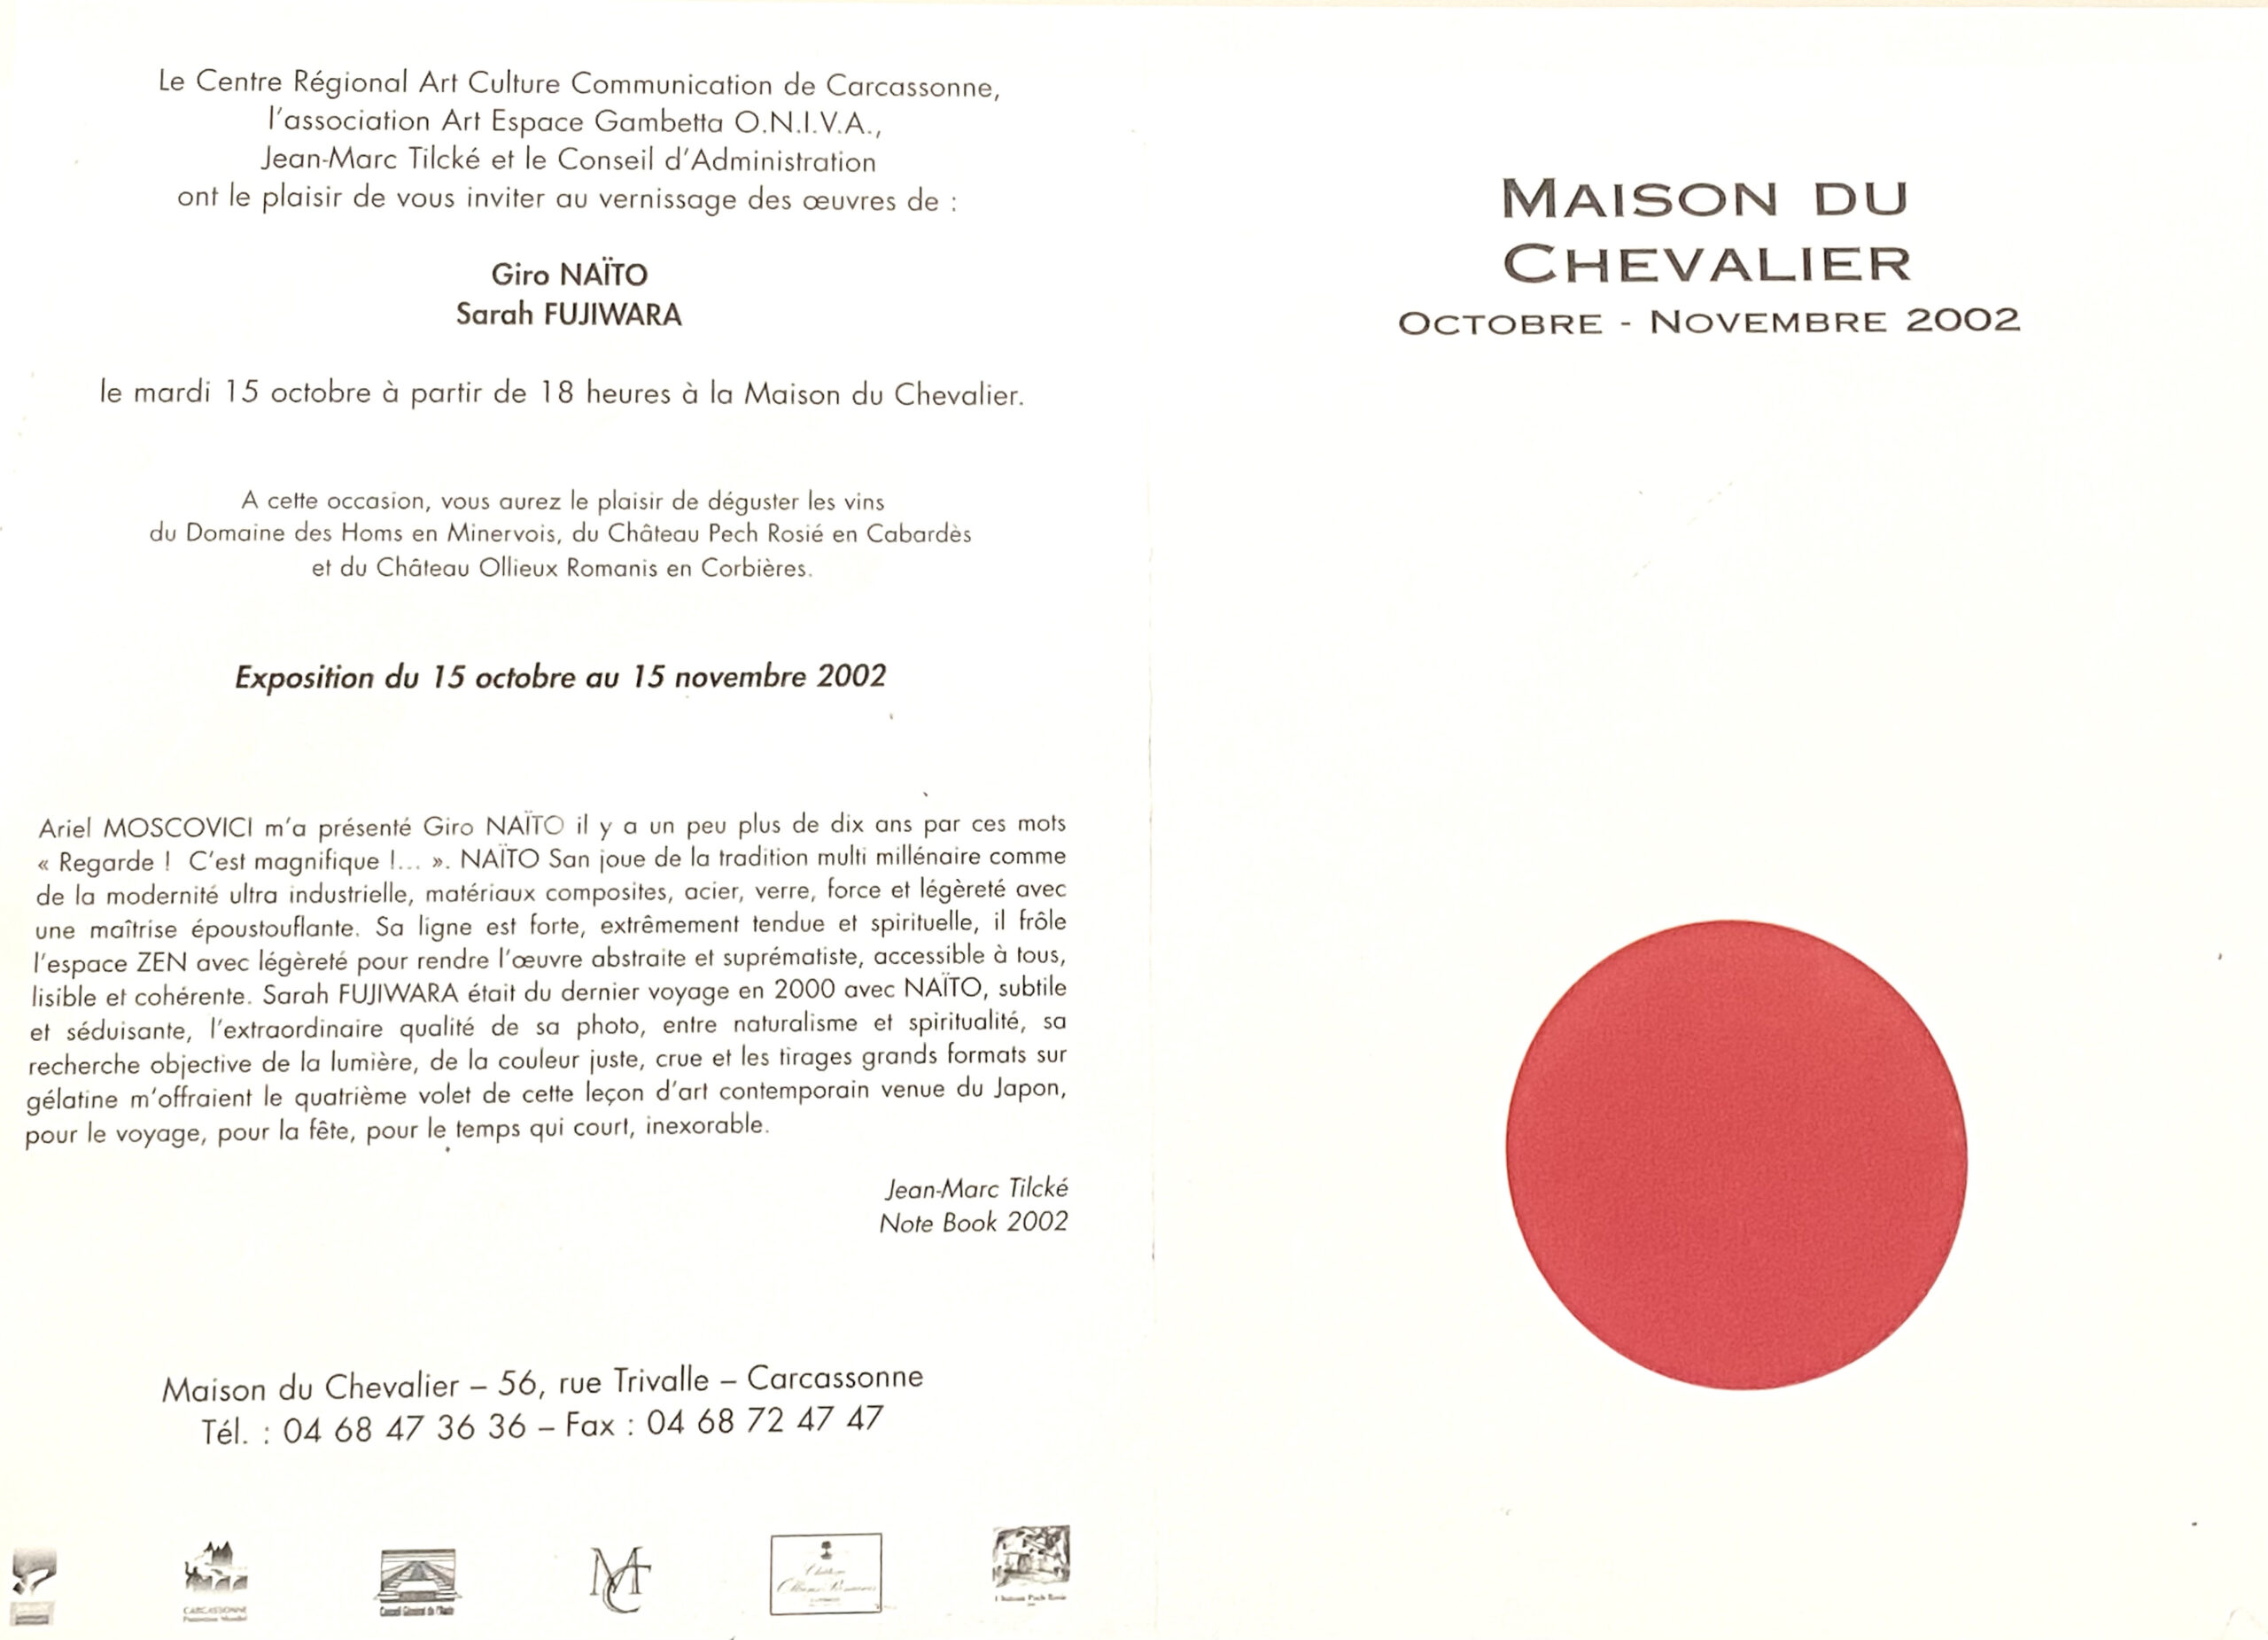 Giro NAITO / Sarah FUJIWARA Exhibition, Oct 15 – Nov. 15, 2002, MAISON DU CHEVALIER, France